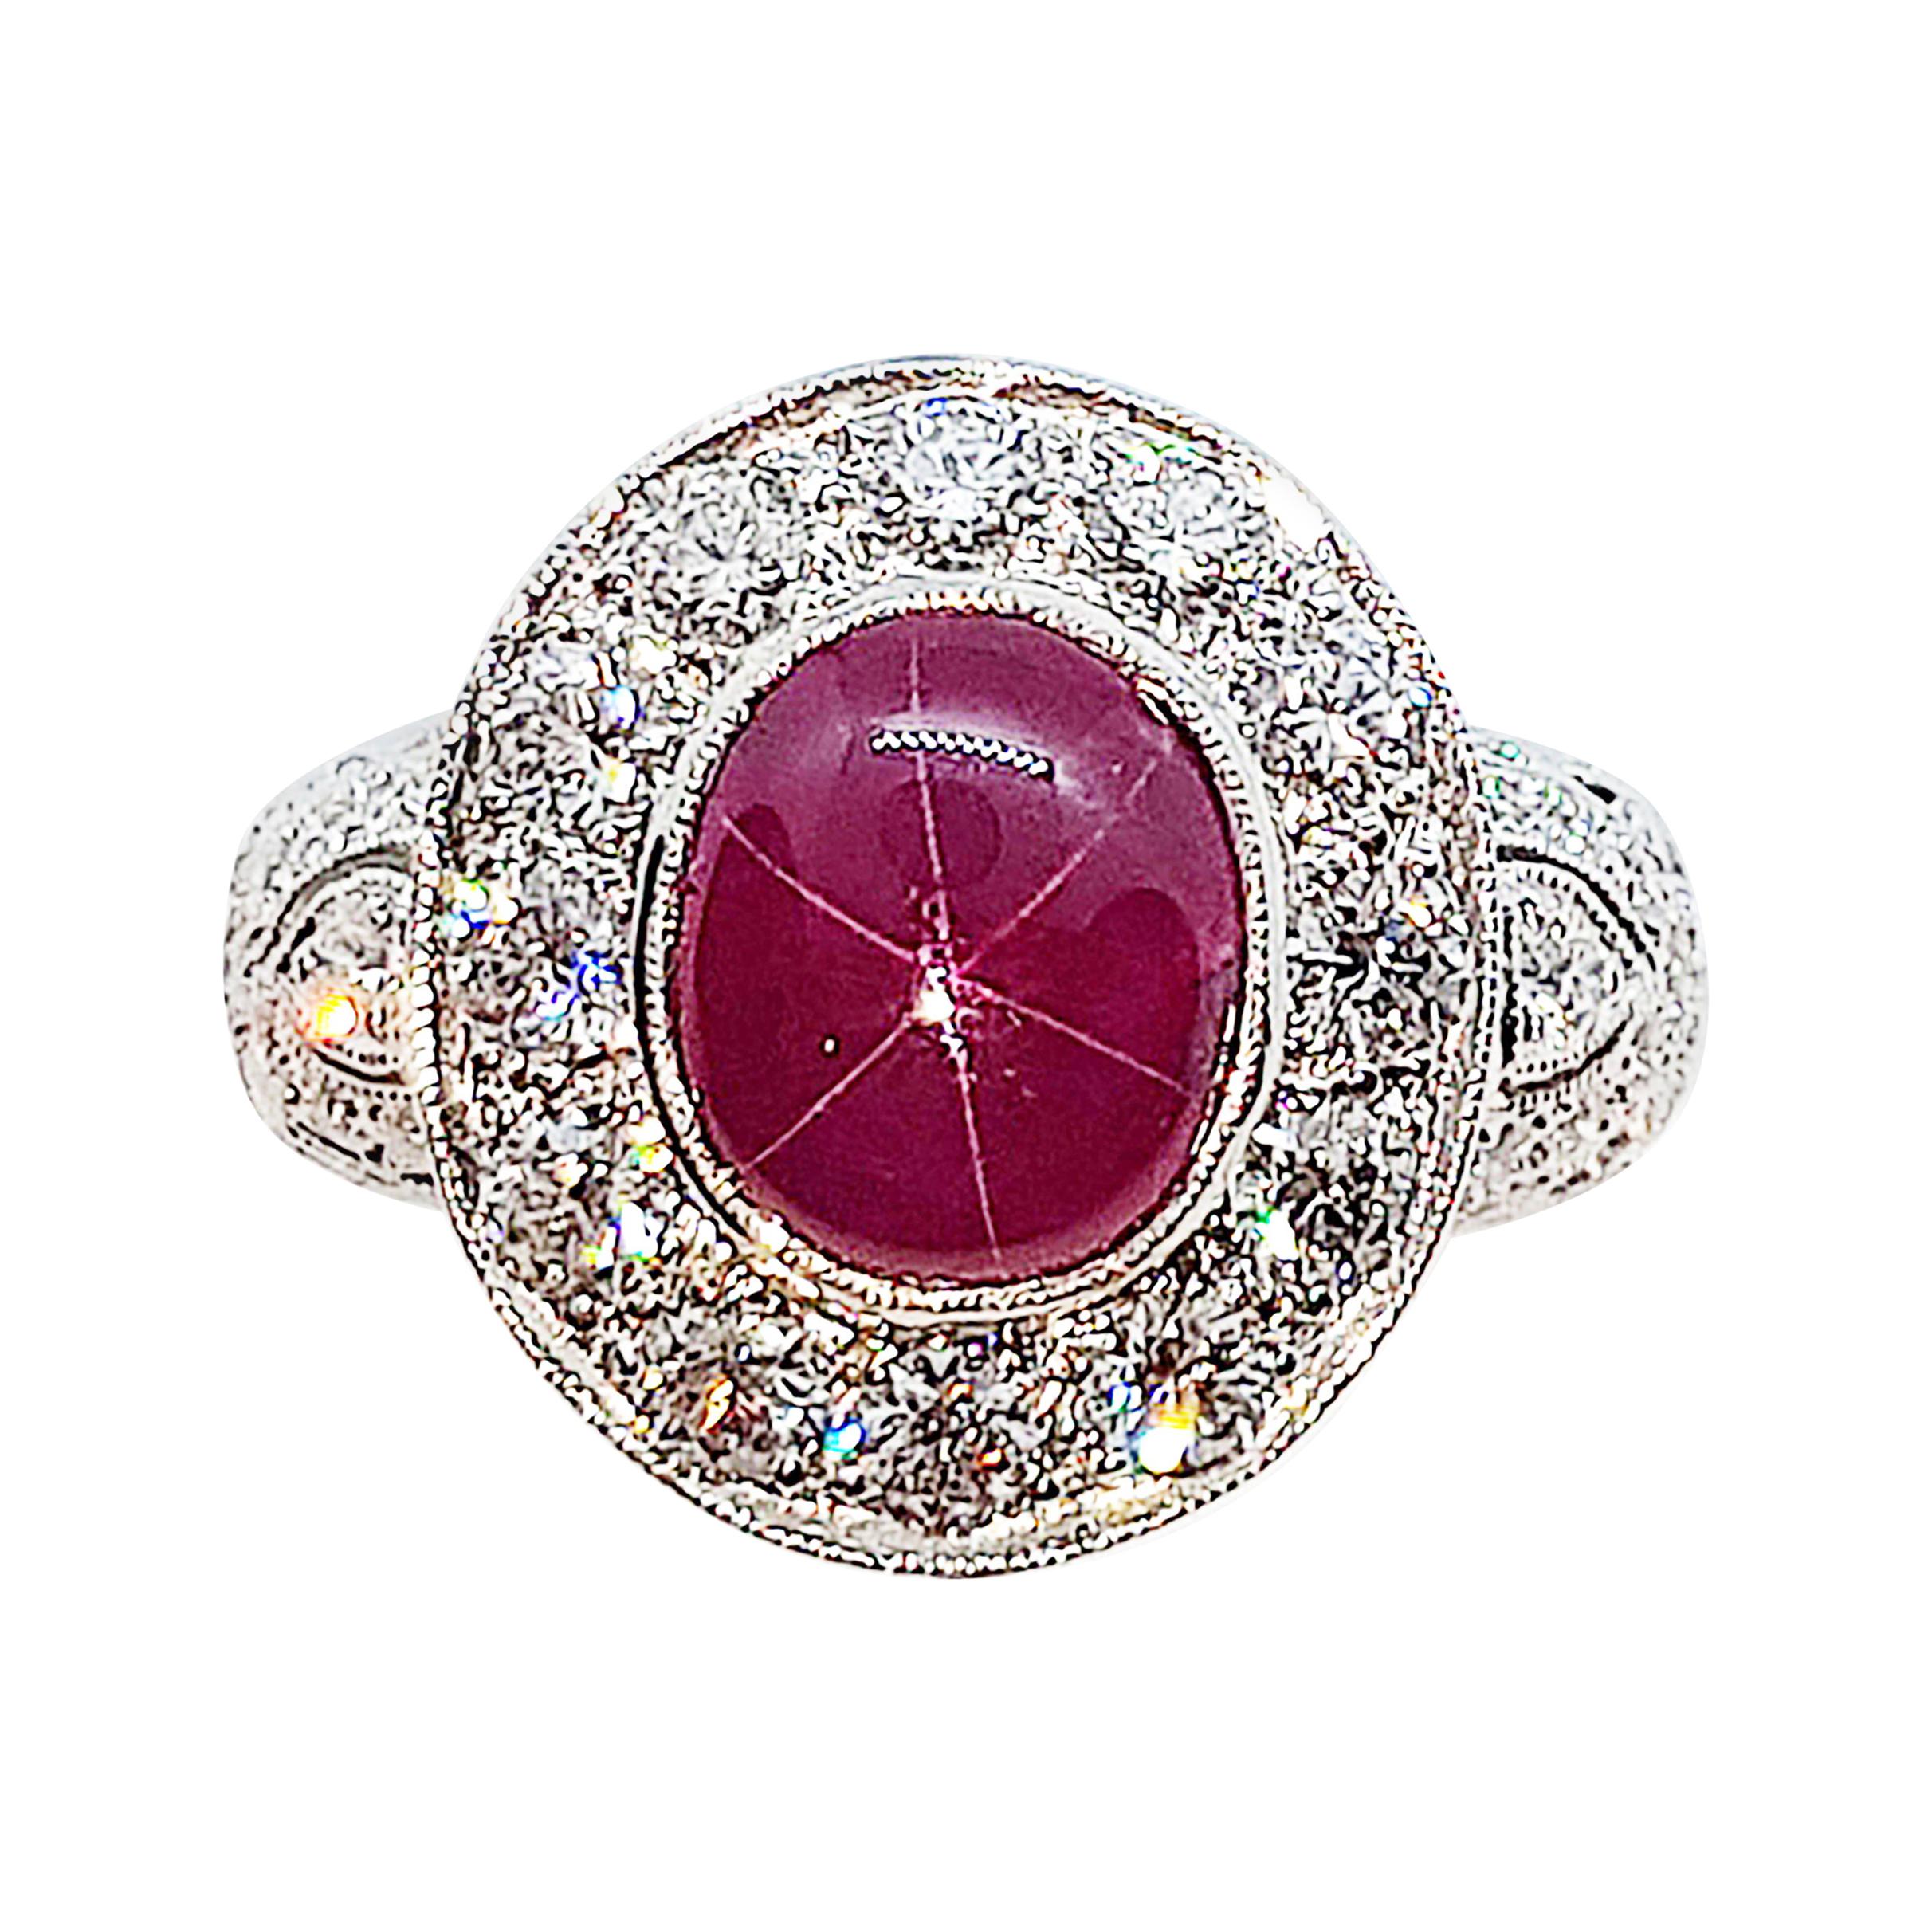 Star Ruby with Diamond Ring Set in 18 Karat White Gold Settings